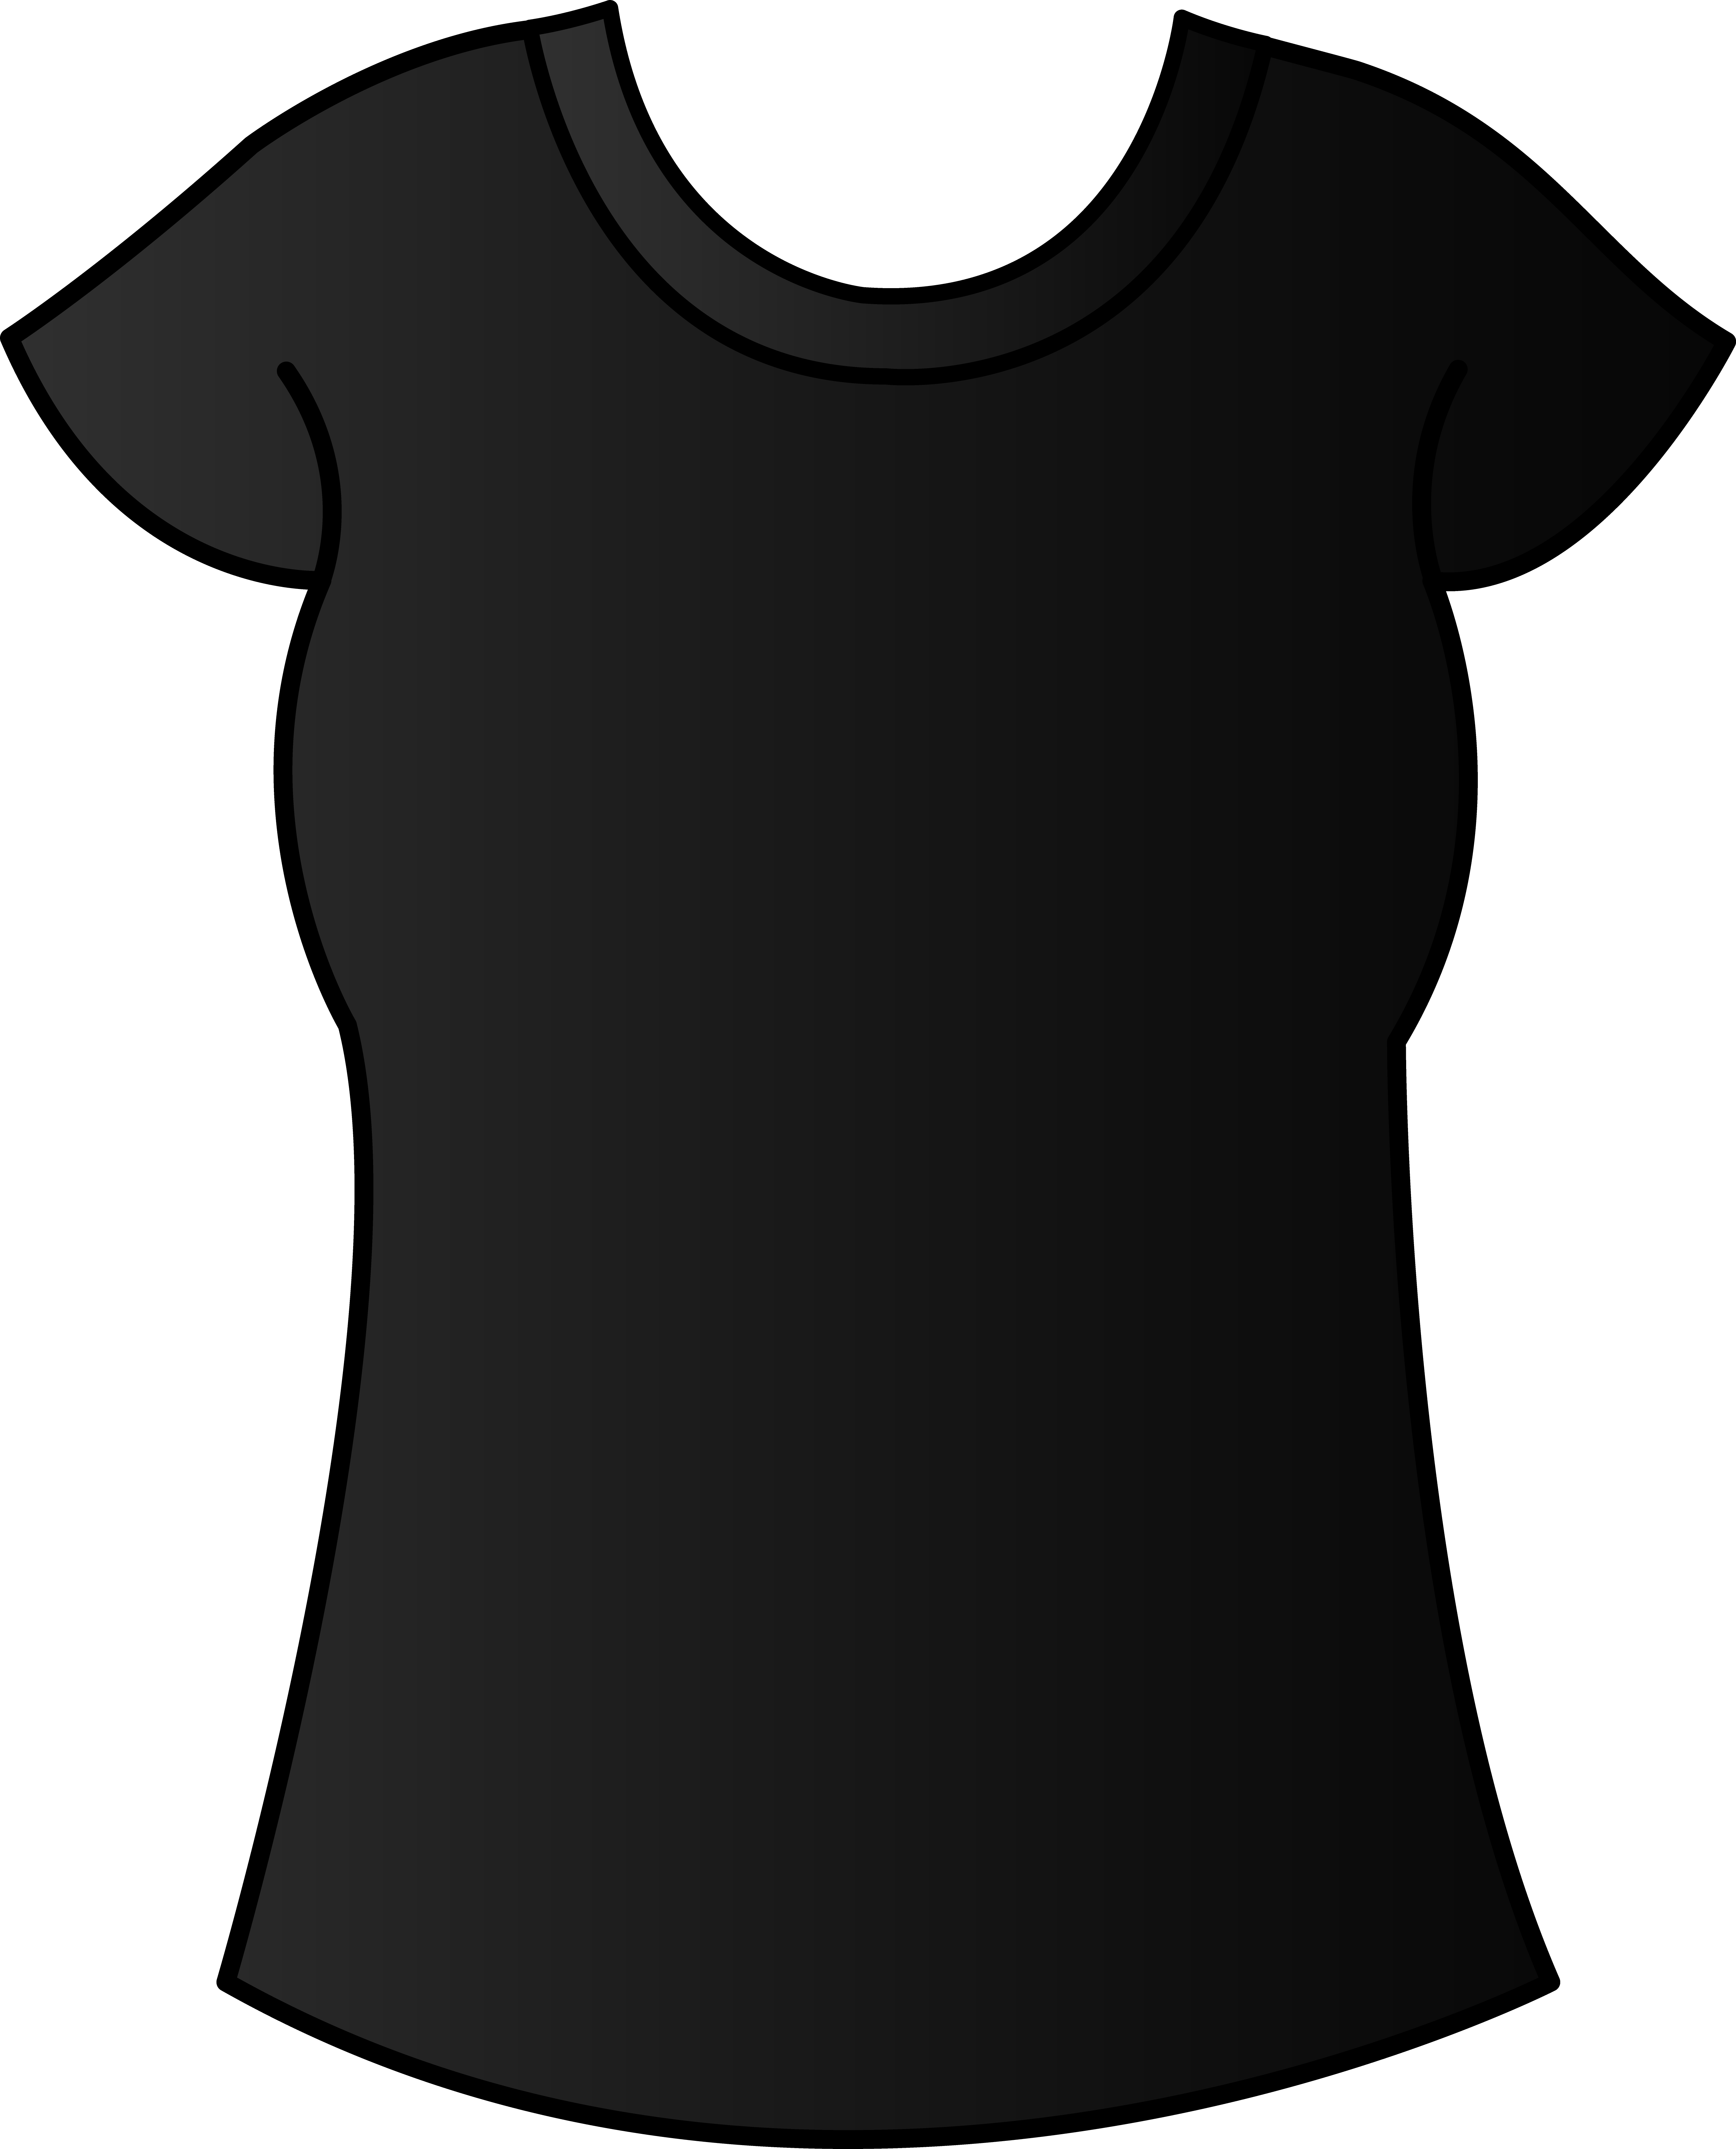 Free Black Suit Shirt Art Clip Download Free Clip Art Free Clip